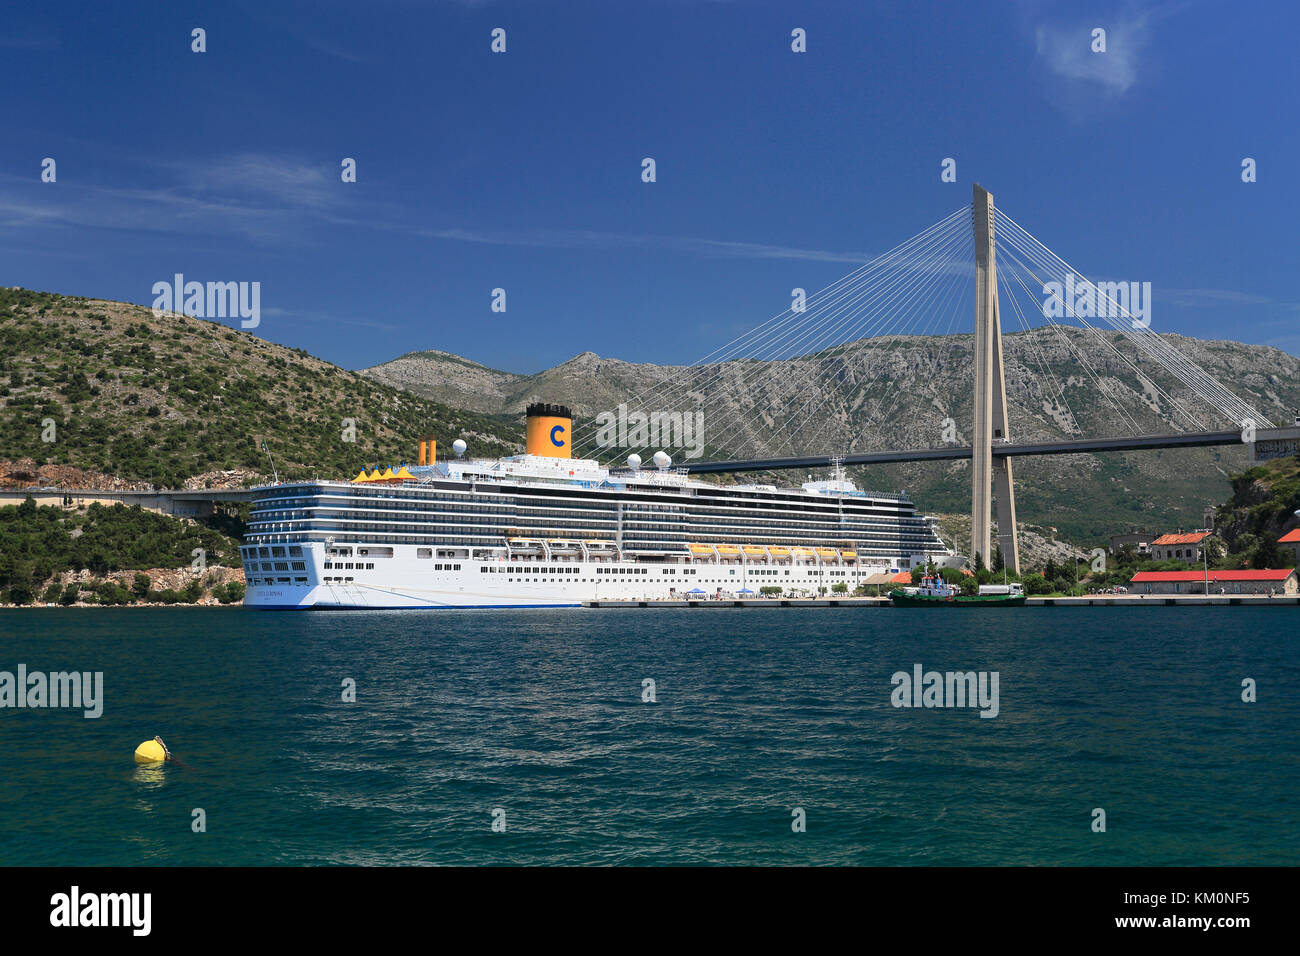 Le Costa Luminosa dans le port de Gruz, Dubrovnik, la côte dalmate, Mer Adriatique, la Croatie, Balkans, Europe. Banque D'Images